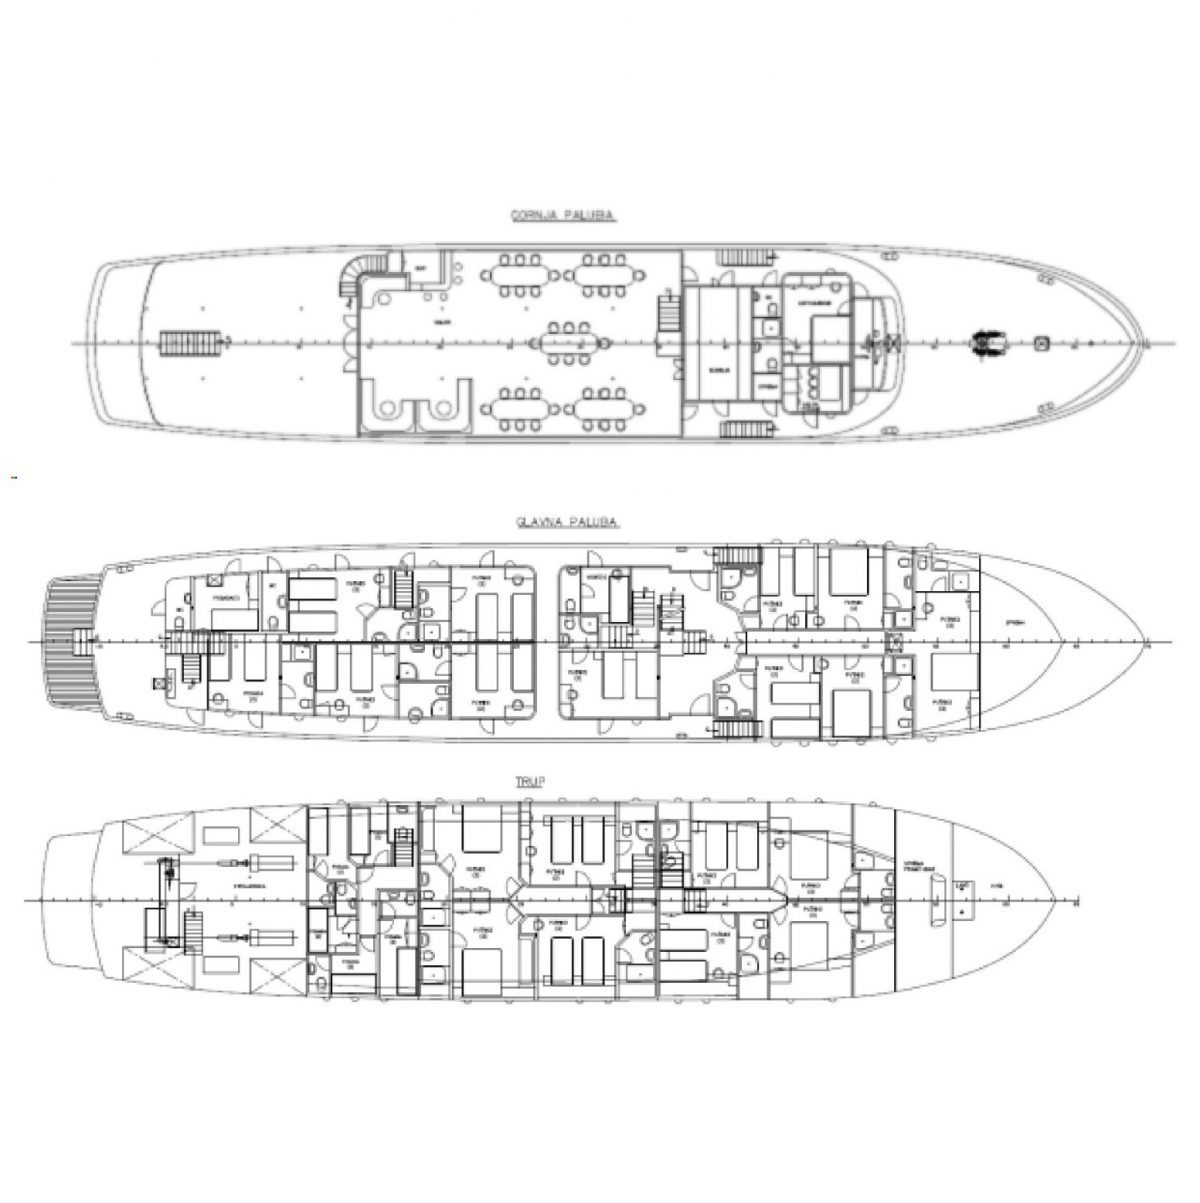 MS-Apolon-deck